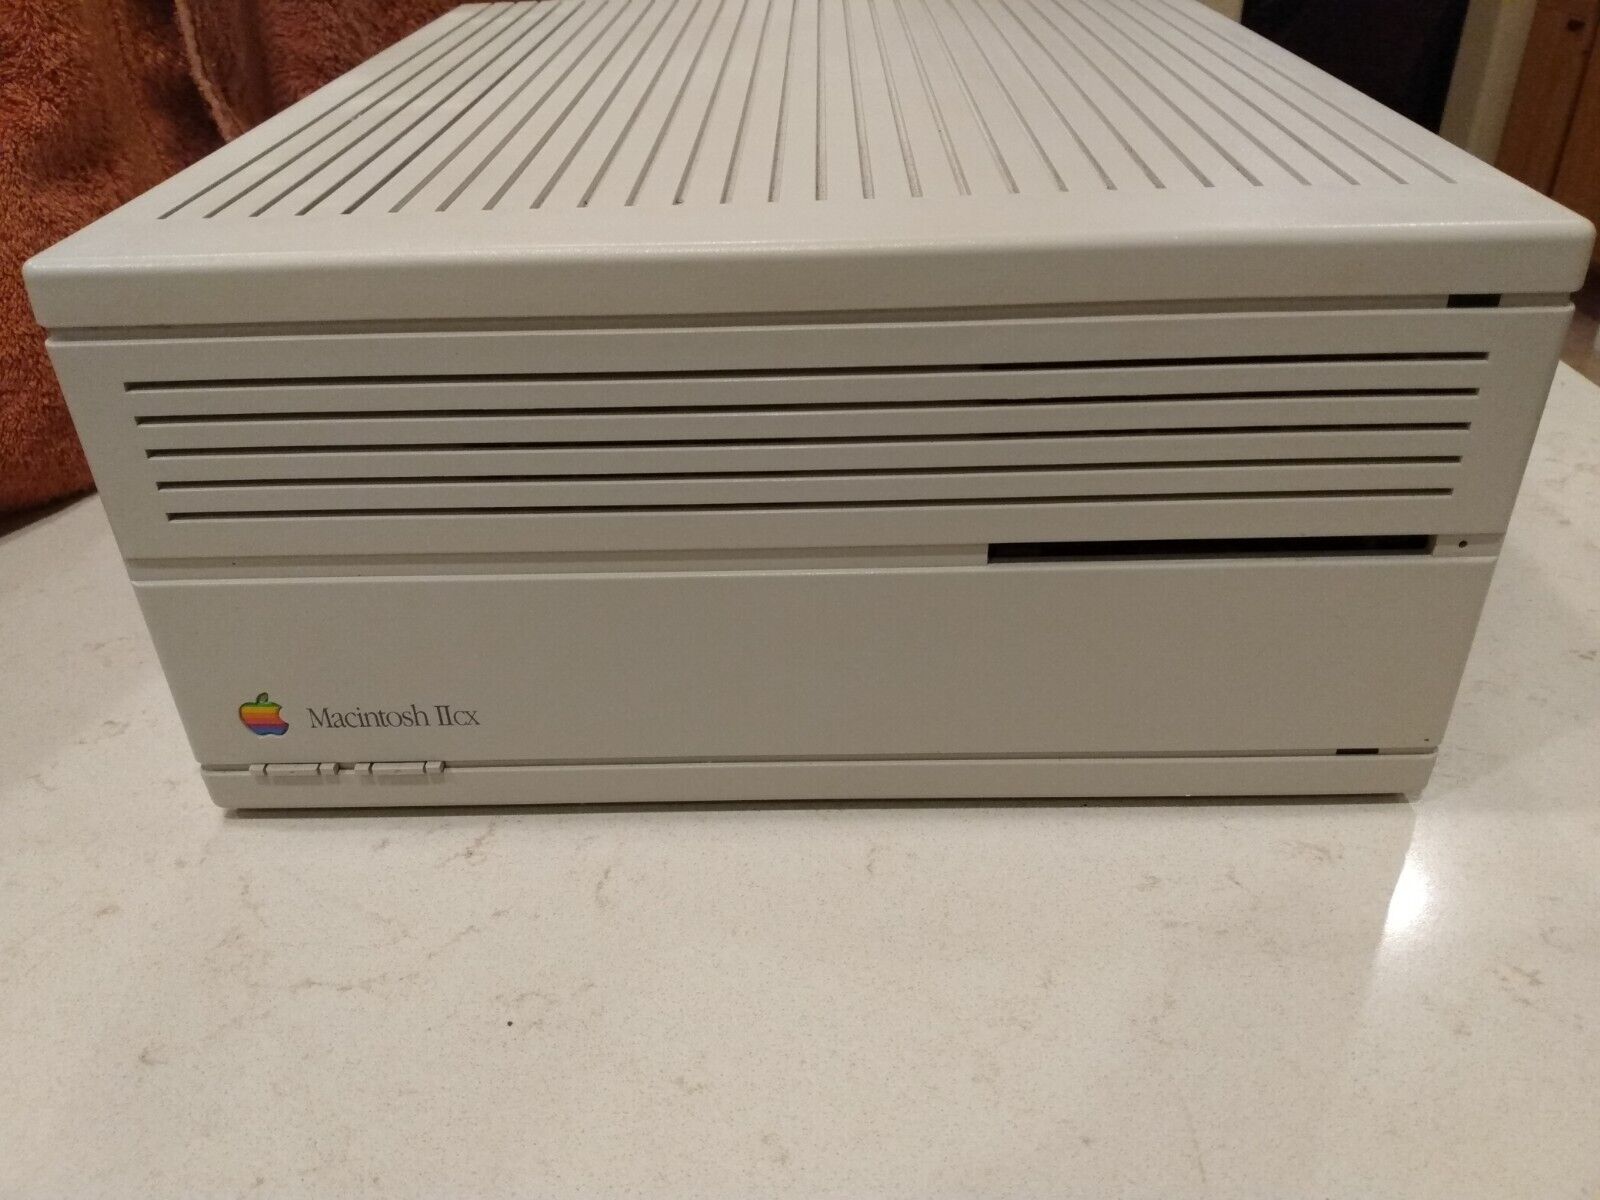 Apple MacIntosh IIcx Vintage Desktop Computer M5650 VERY CLEAN Untested